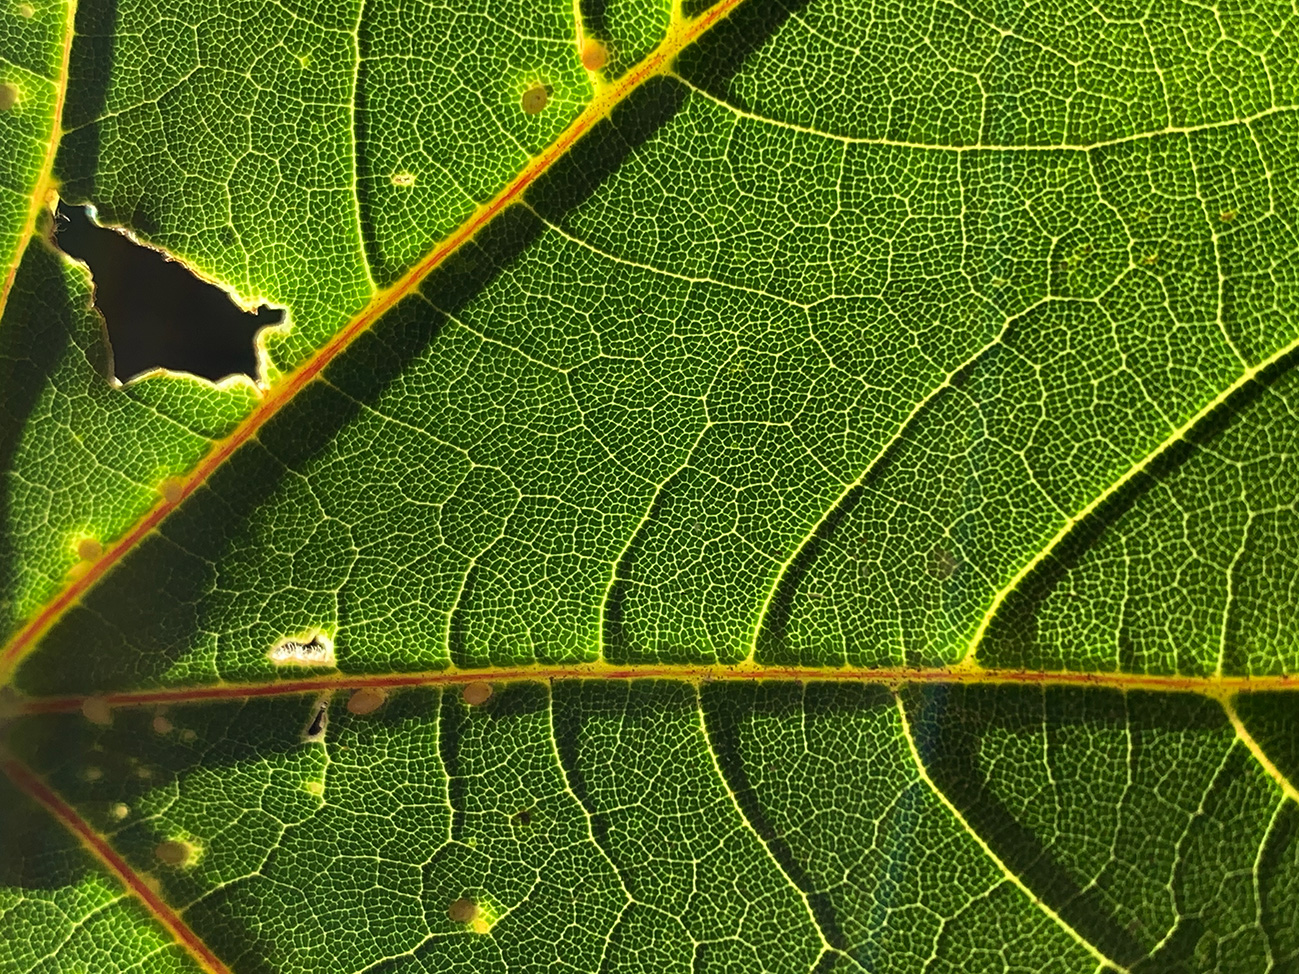 Underside Sycamore leaf, Staffordshire UK